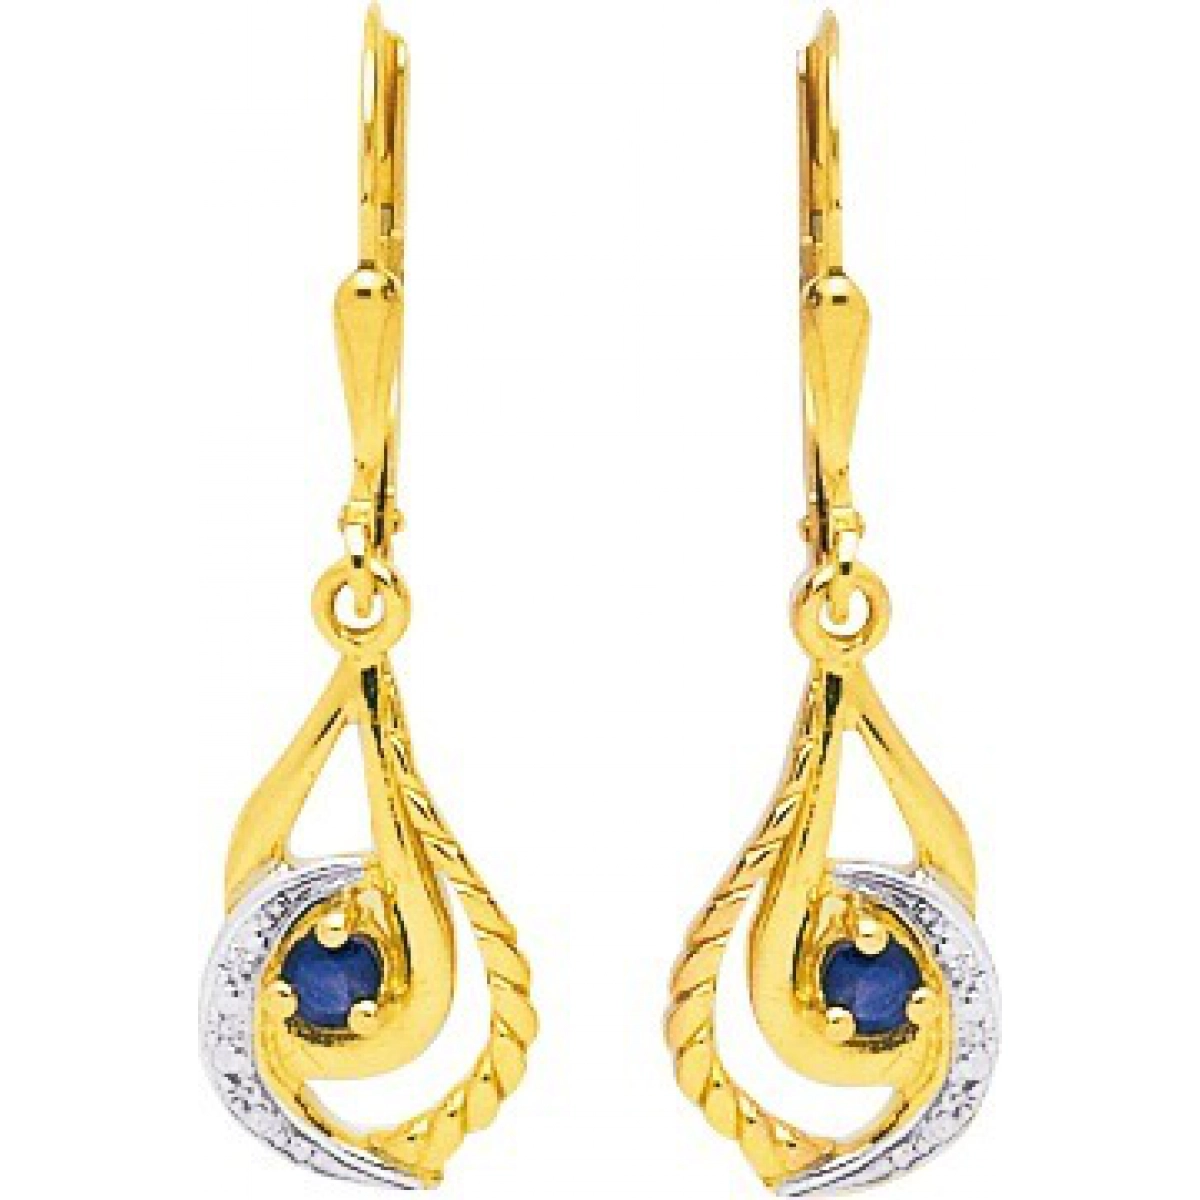 Earrings pair Sapphire 9K YG rhod  Lua Blanca  293034.S3.0